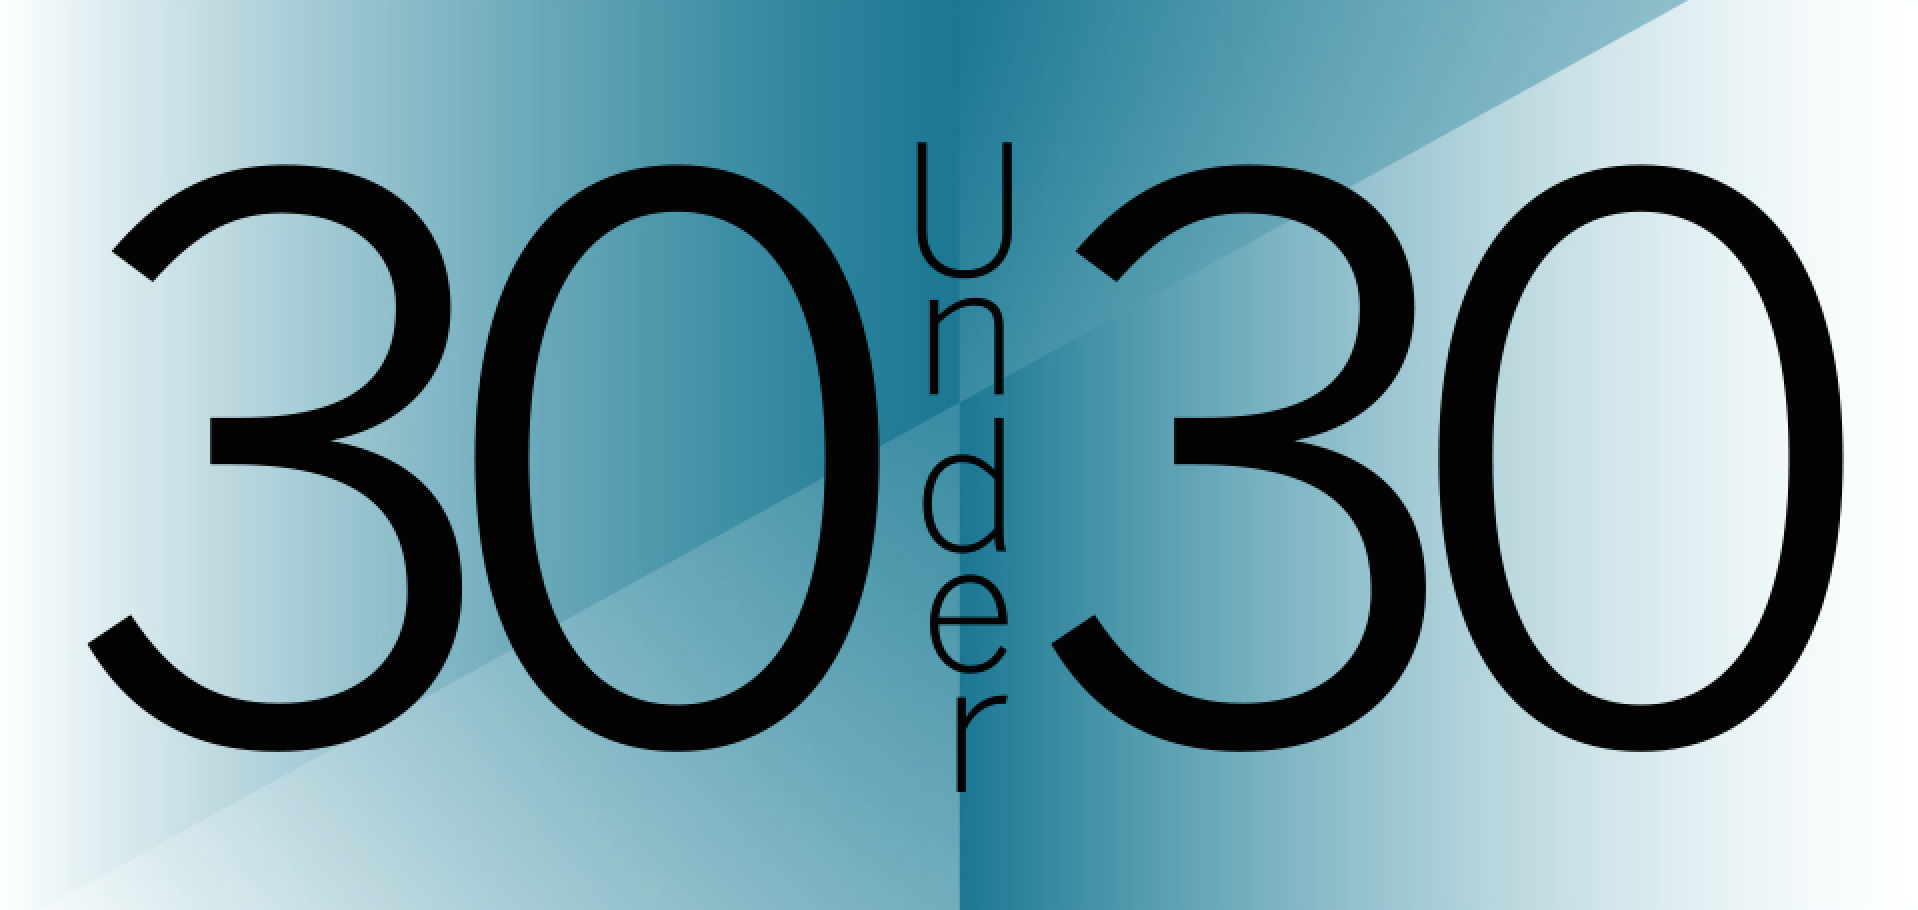 30U30 logo